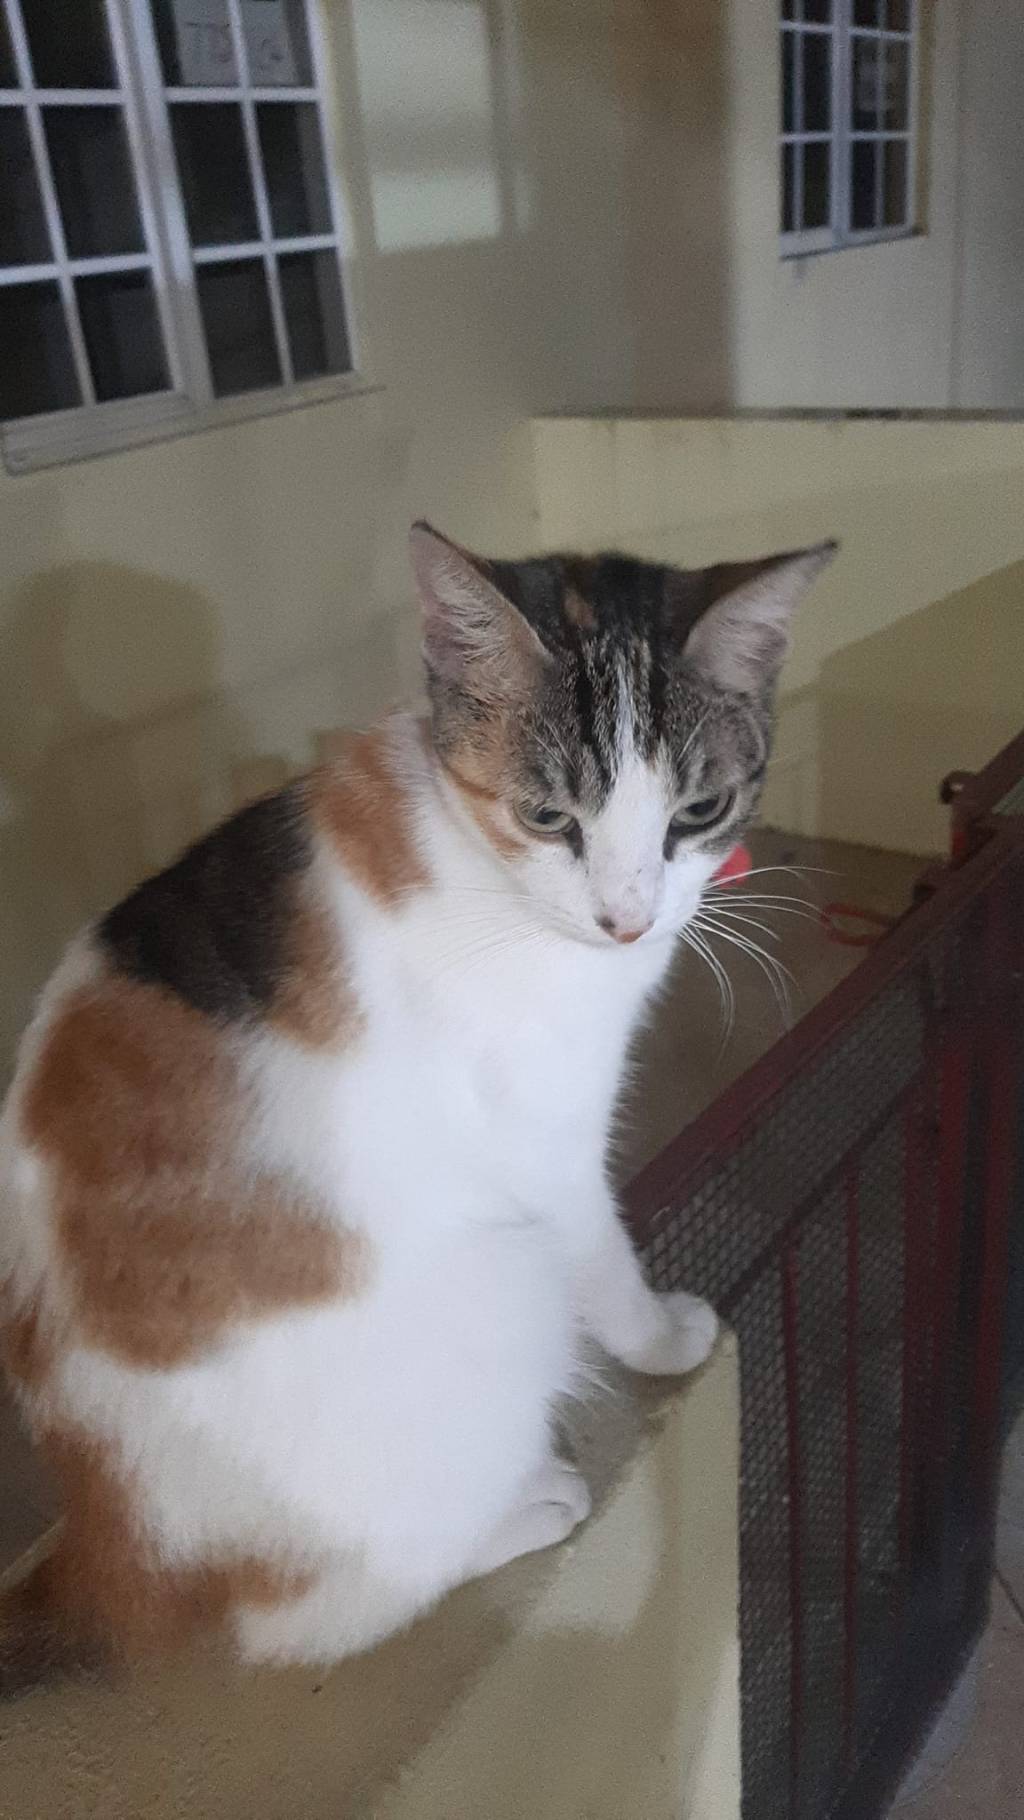 Missing: Calico cat in San Fernando